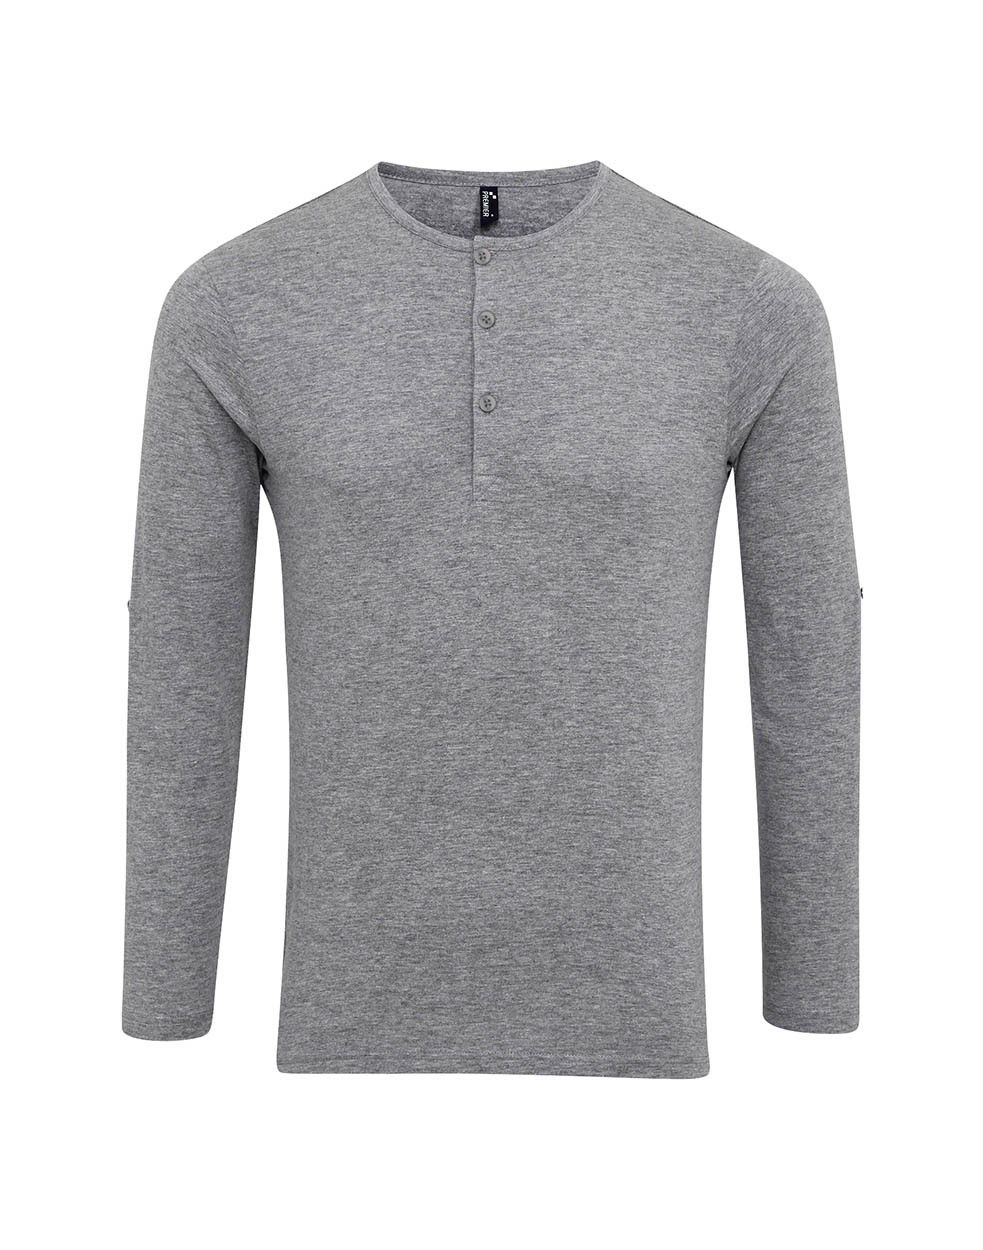 Premier PR218 Long John roll-sleeve tee - Mens Long Sleeve T-Shirts -  Unisex / Men's T Shirt Alternatives - Unisex / Men's T Shirts - T Shirts -  Leisurewear - Best Workwear